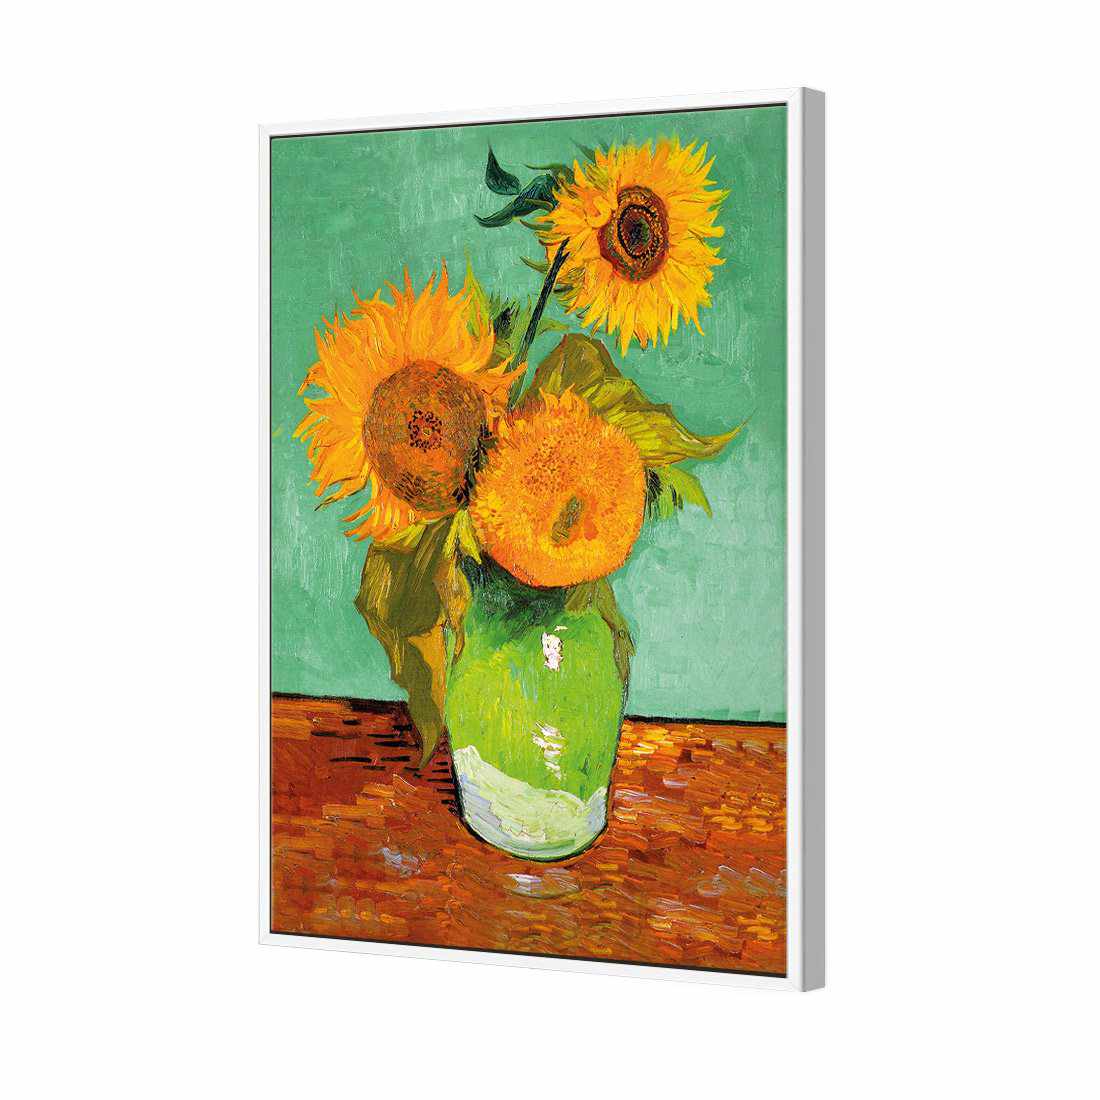 Sunflowers On Green by Van Gogh Canvas Art-Canvas-Wall Art Designs-45x30cm-Canvas - White Frame-Wall Art Designs